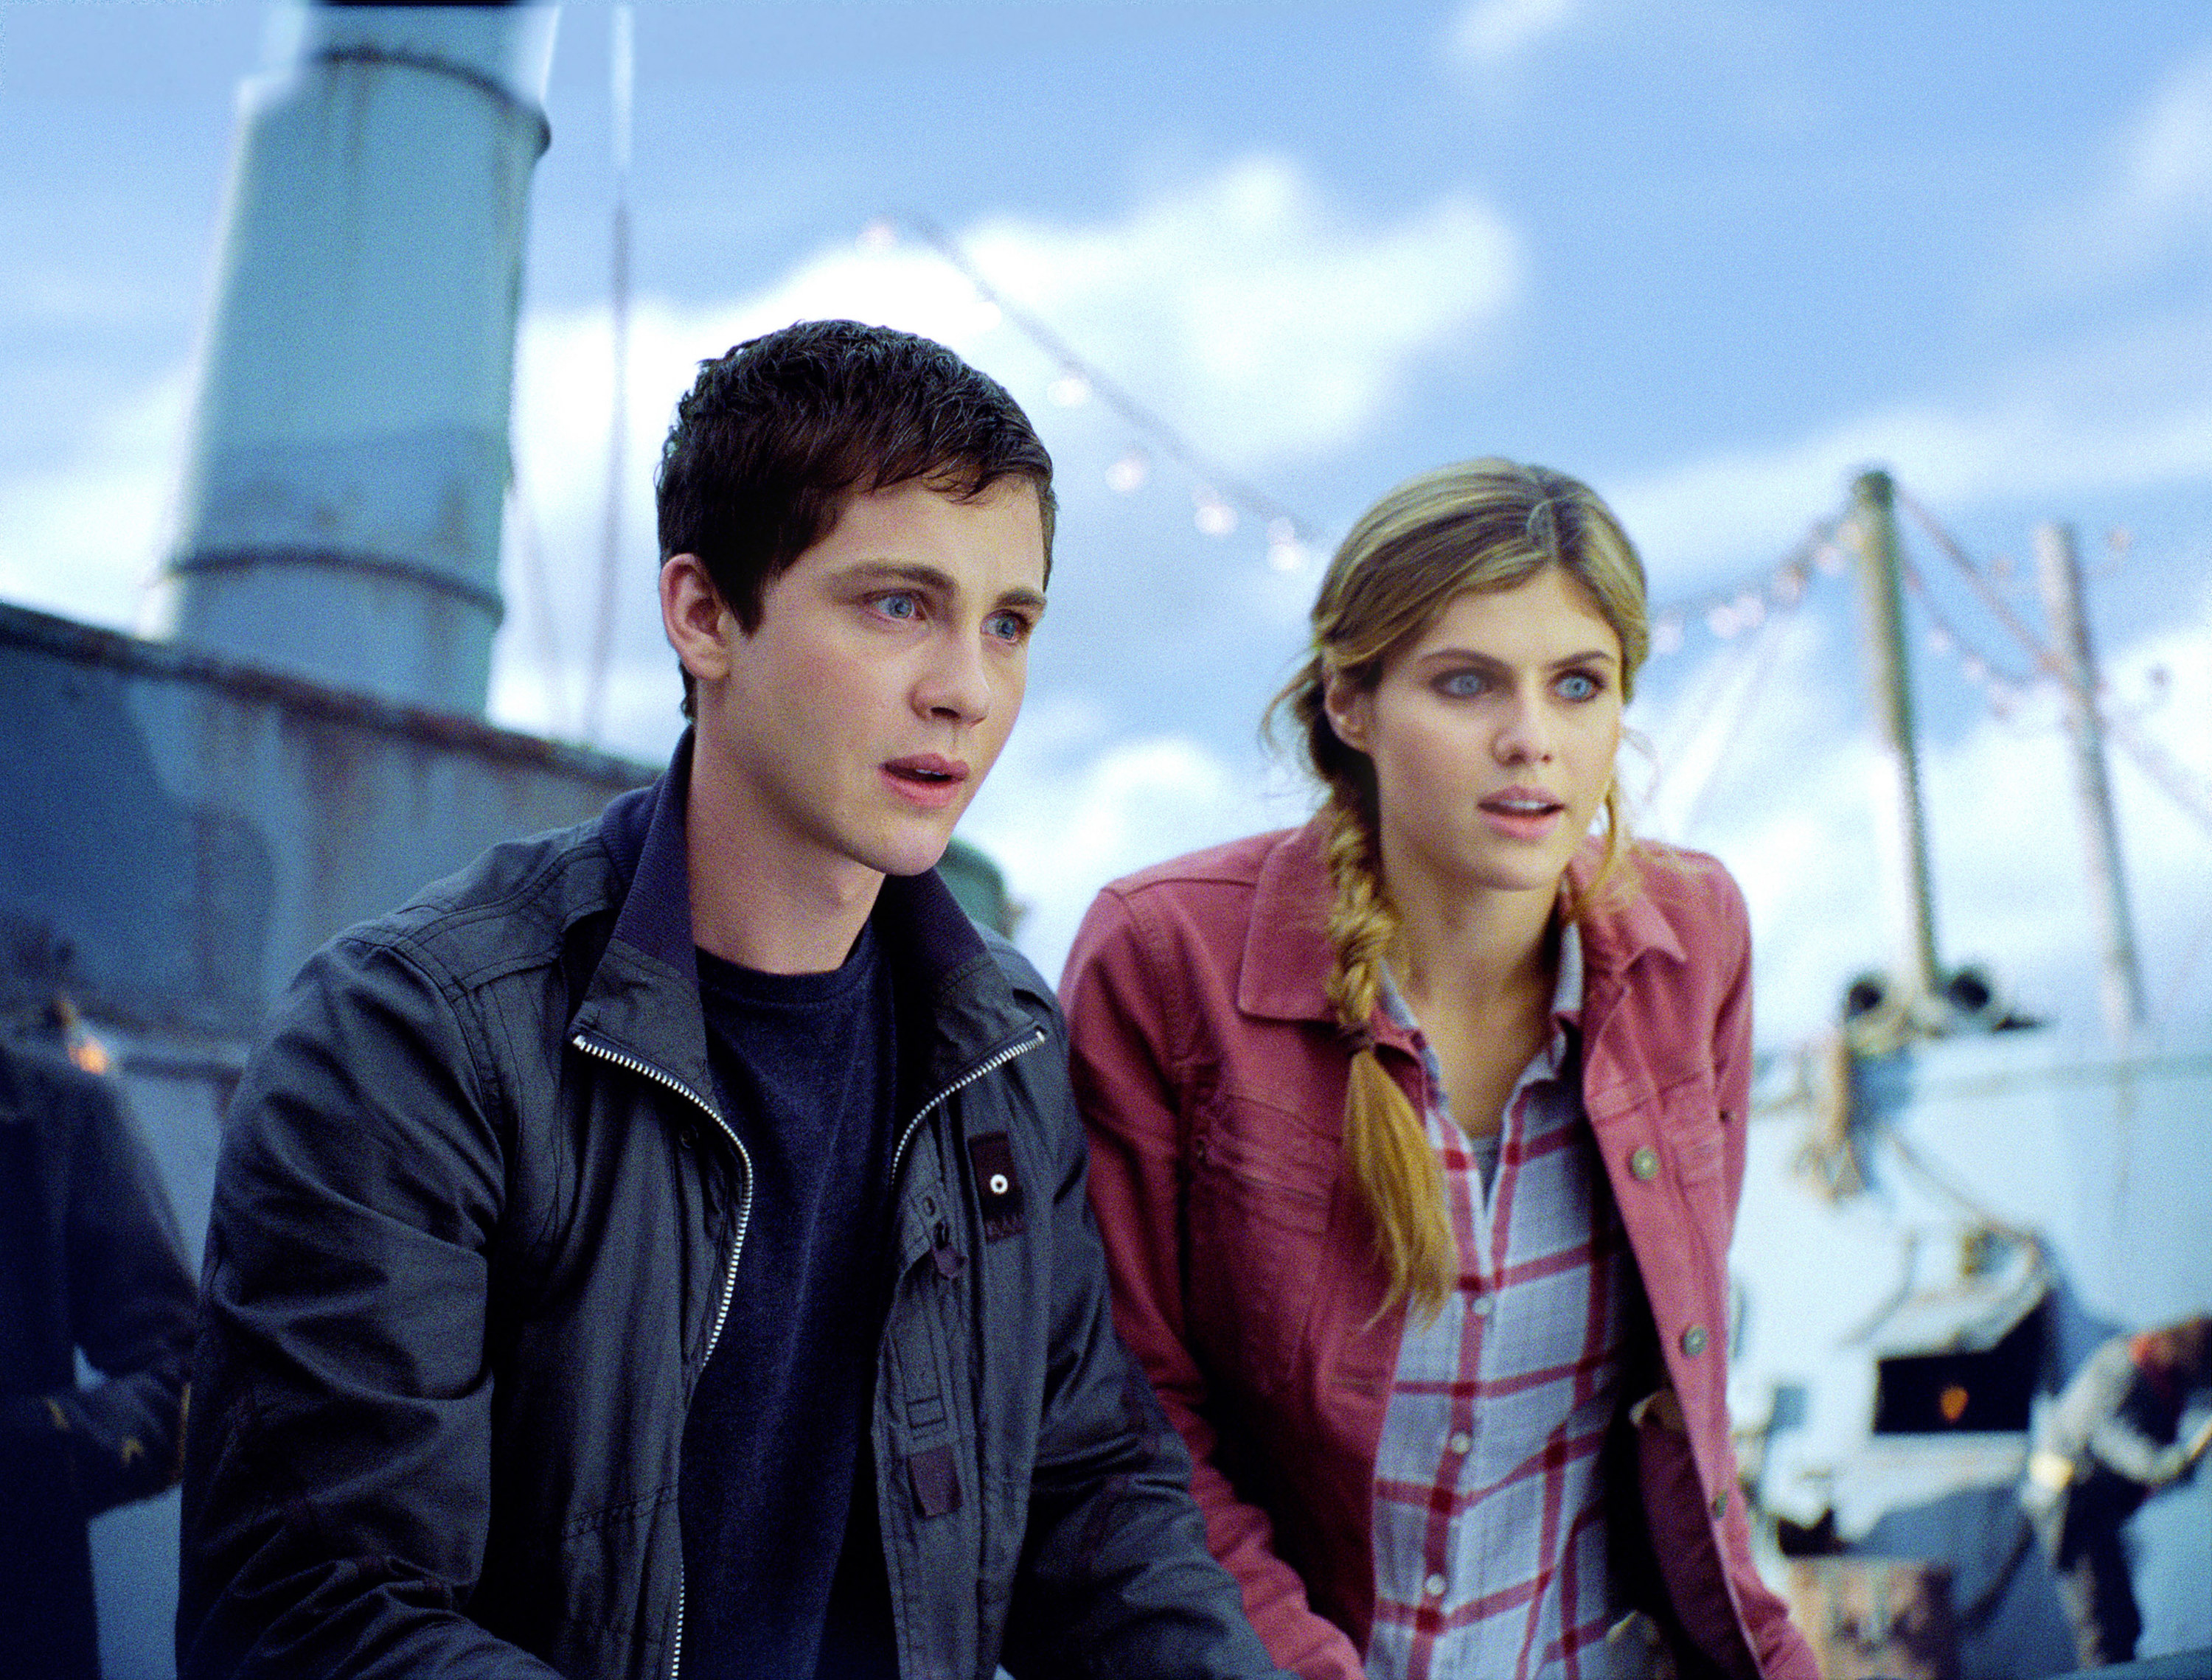 Alexandra in the film standing next to Logan Lerman